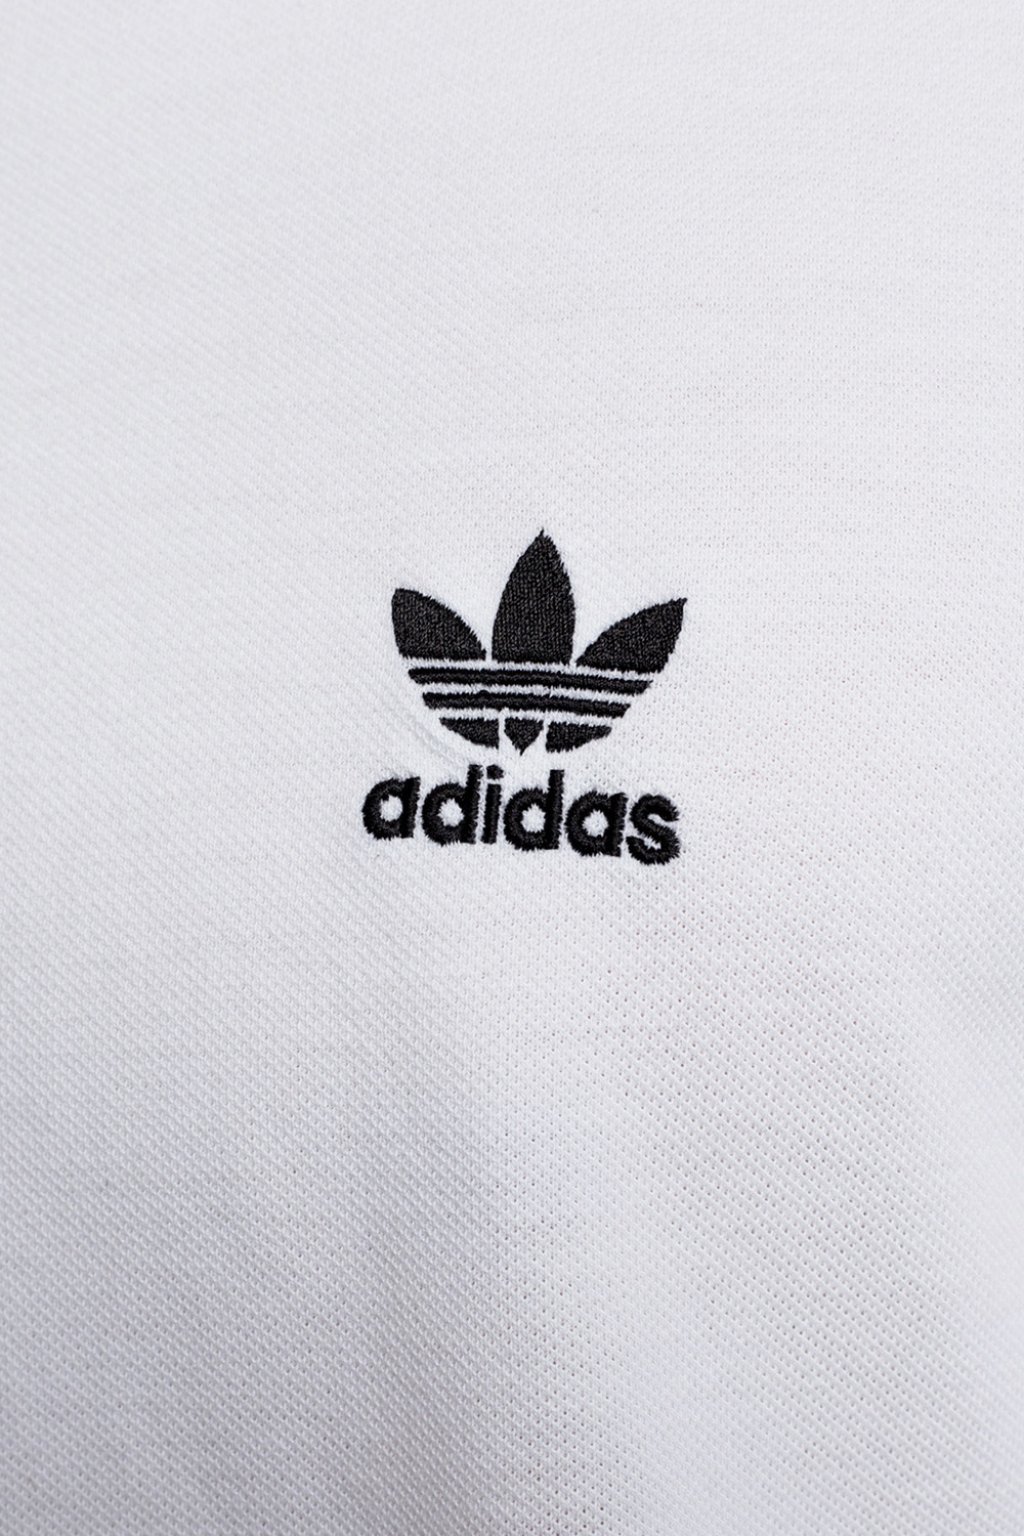 Adidas Embroidery | ubicaciondepersonas.cdmx.gob.mx